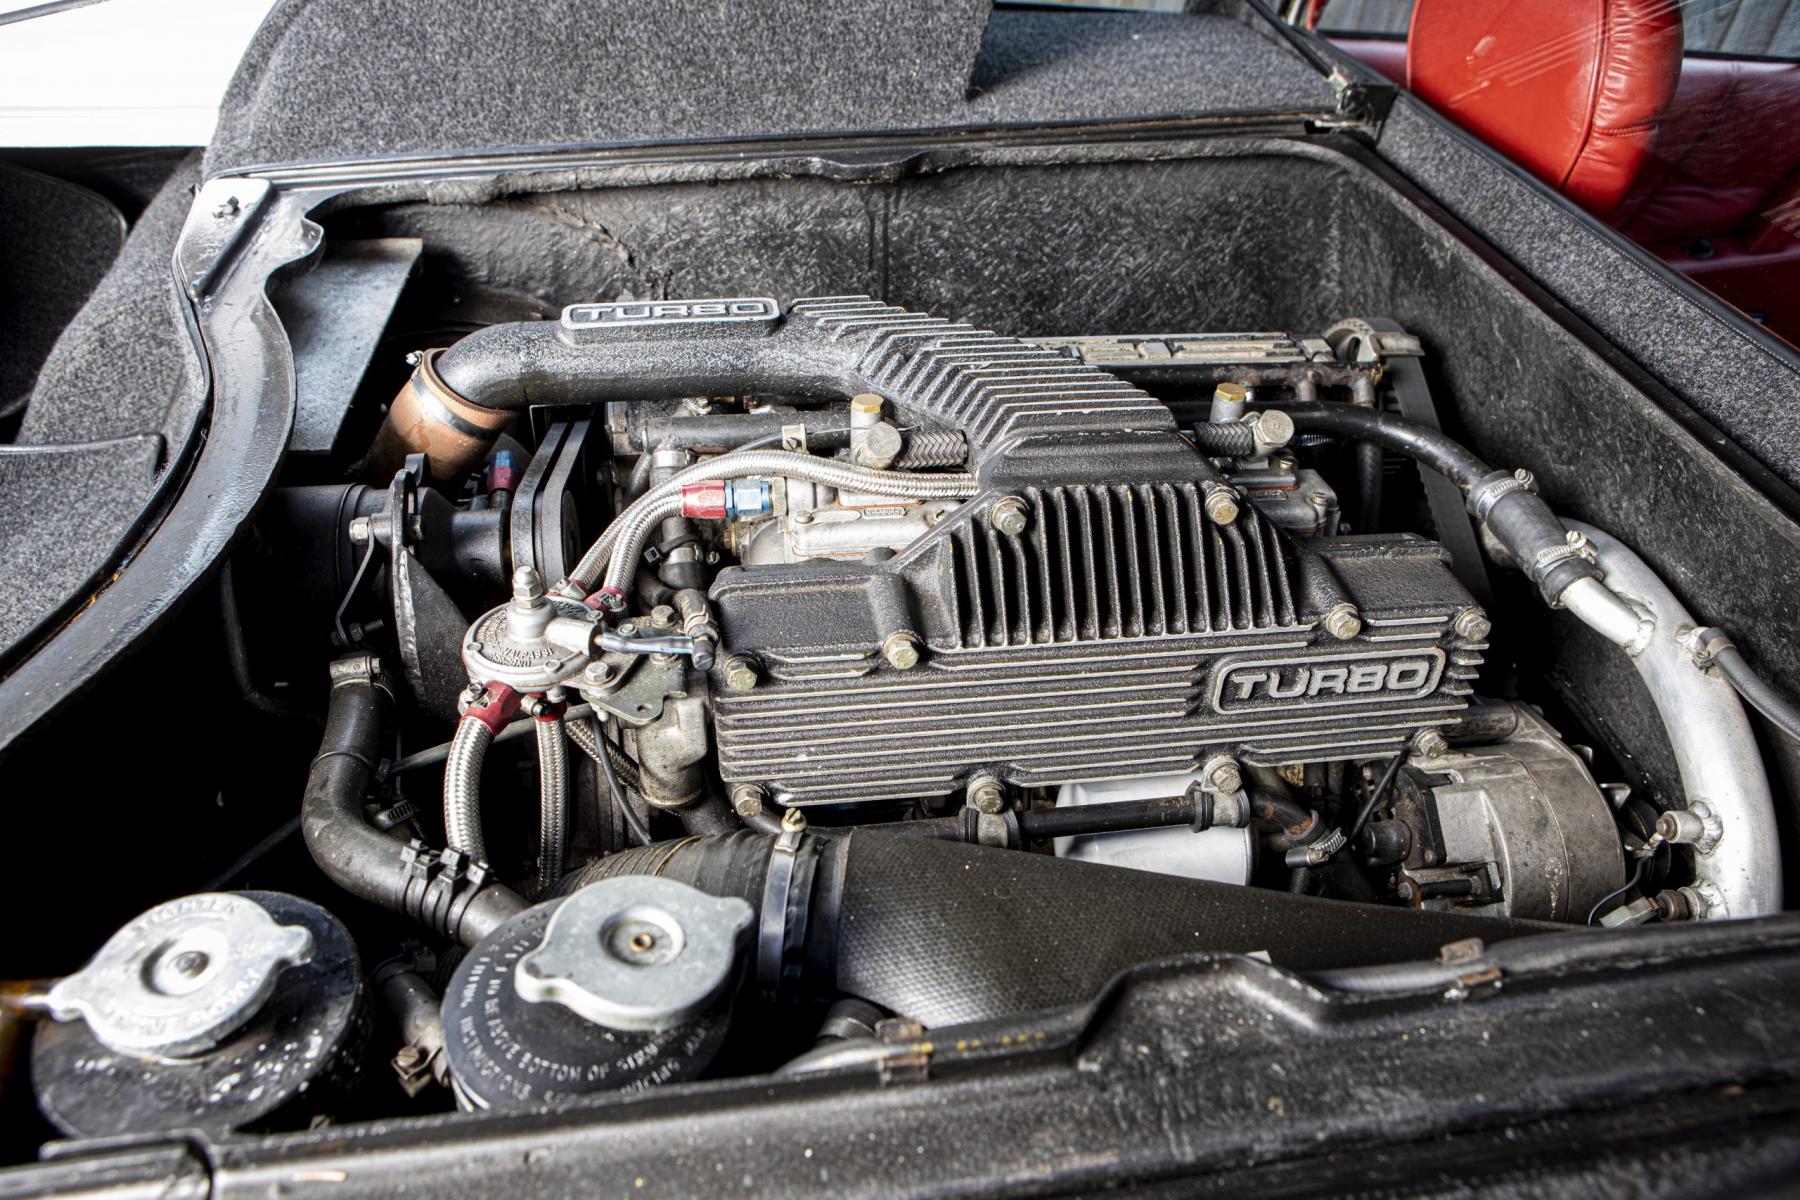 Colin Chapman's Lotus Esprit Turbo